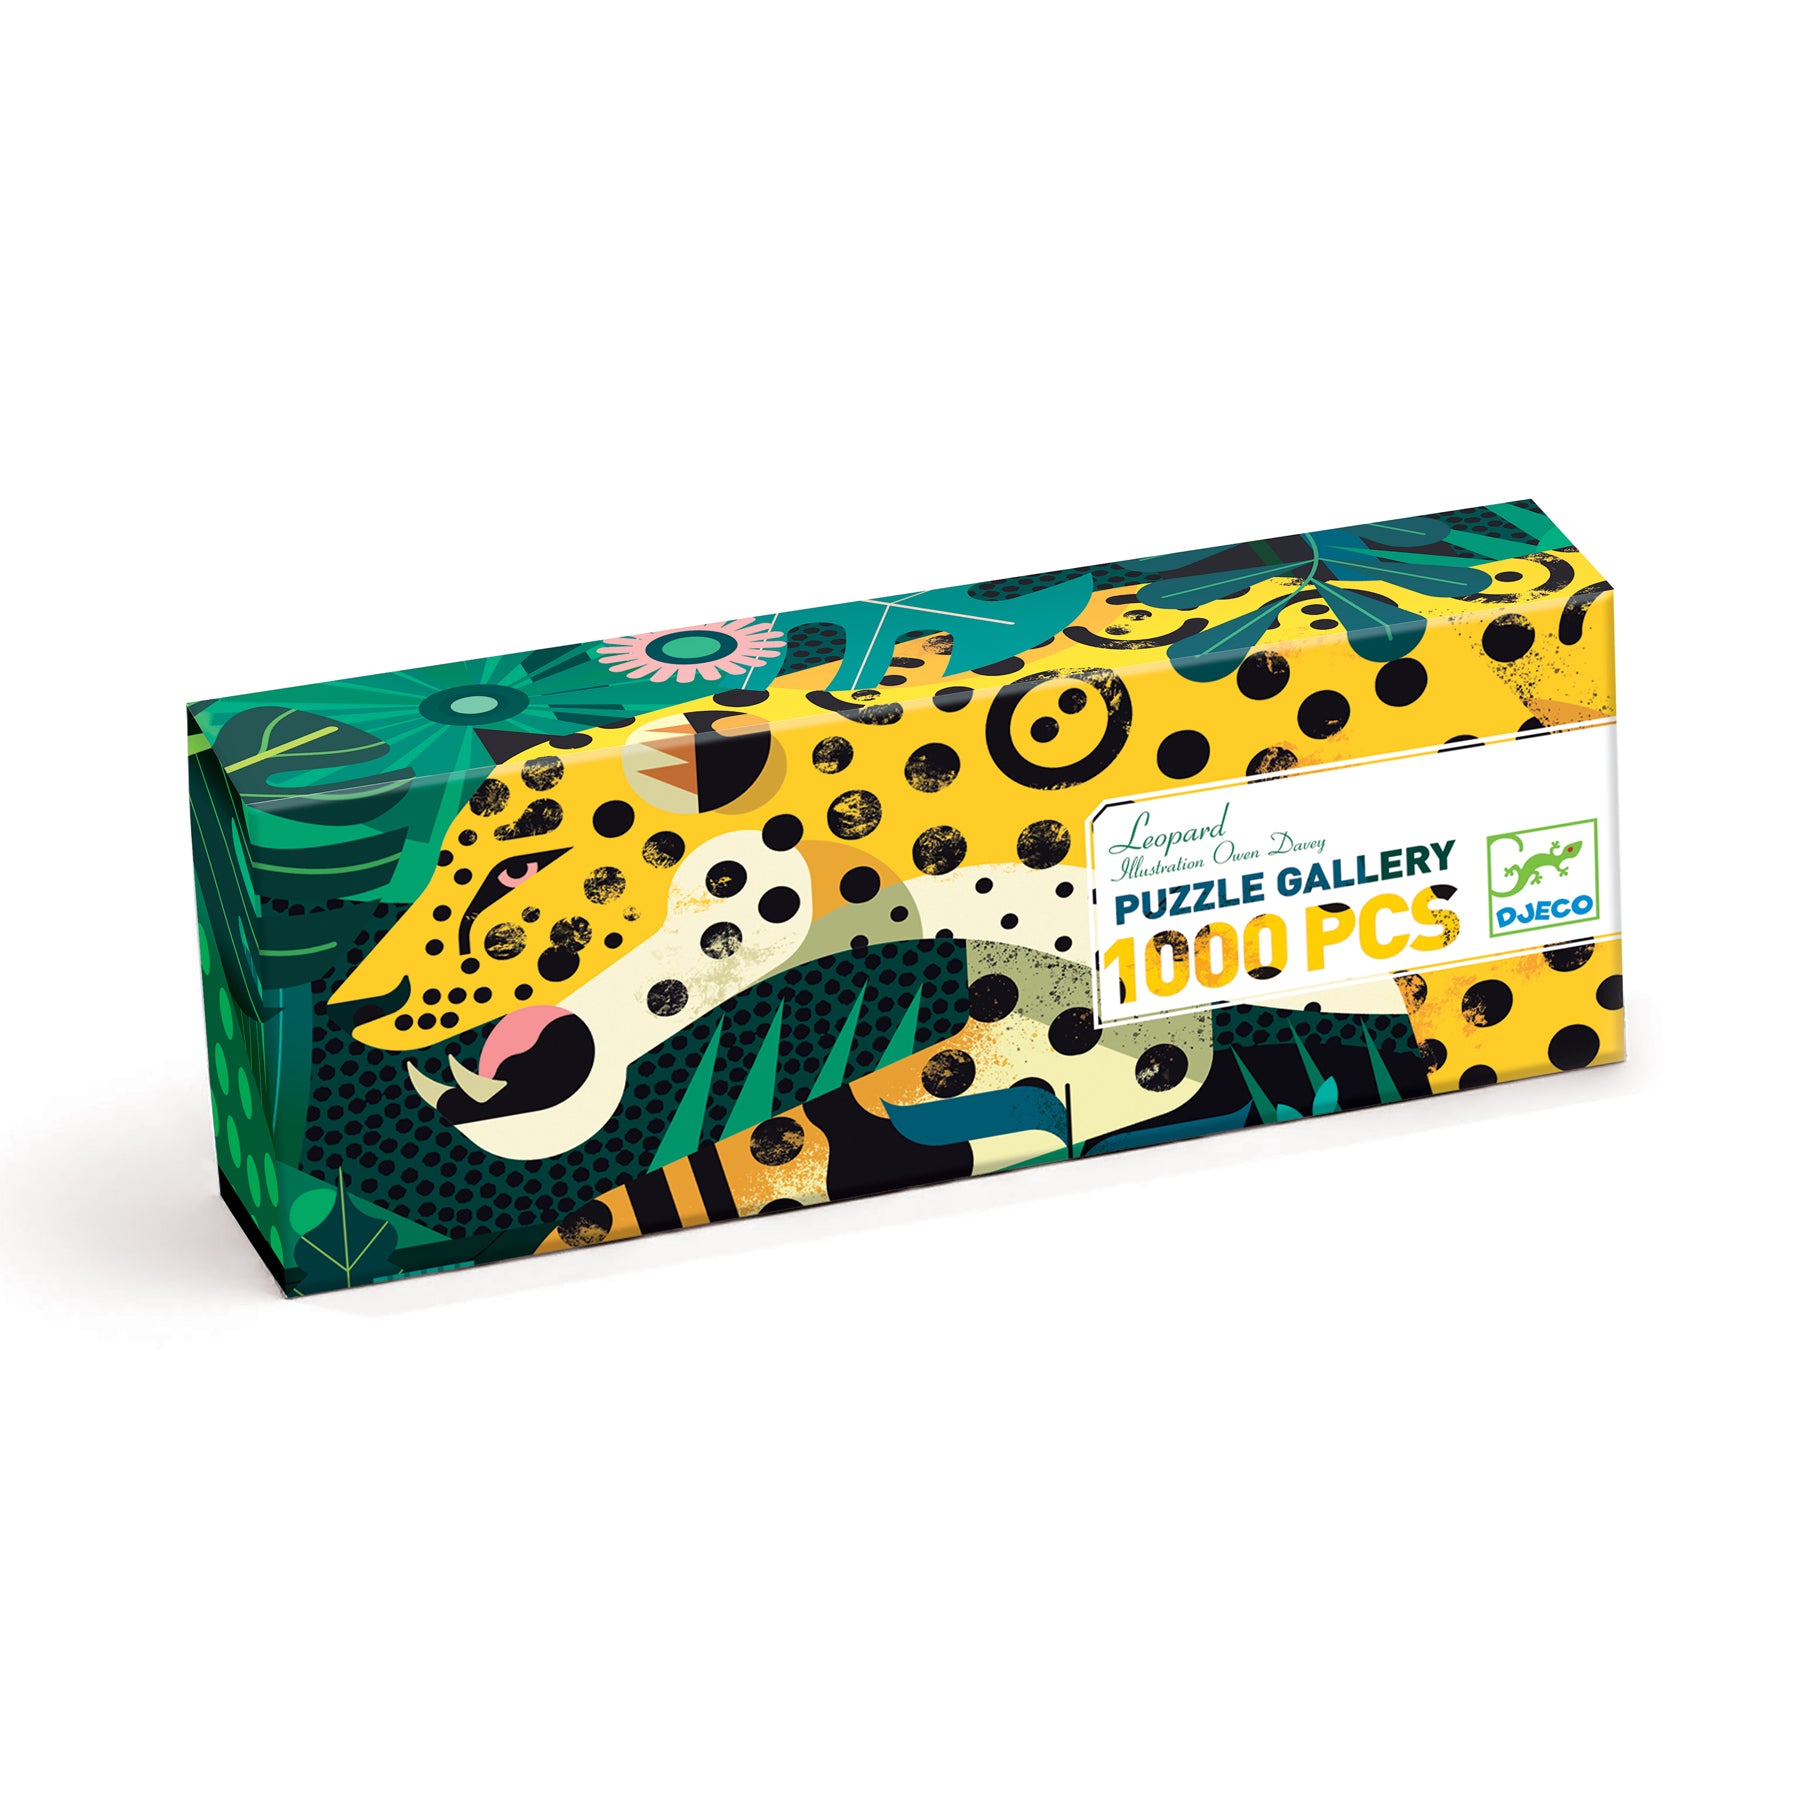 Leopard 1000 Piece Gallery Puzzle